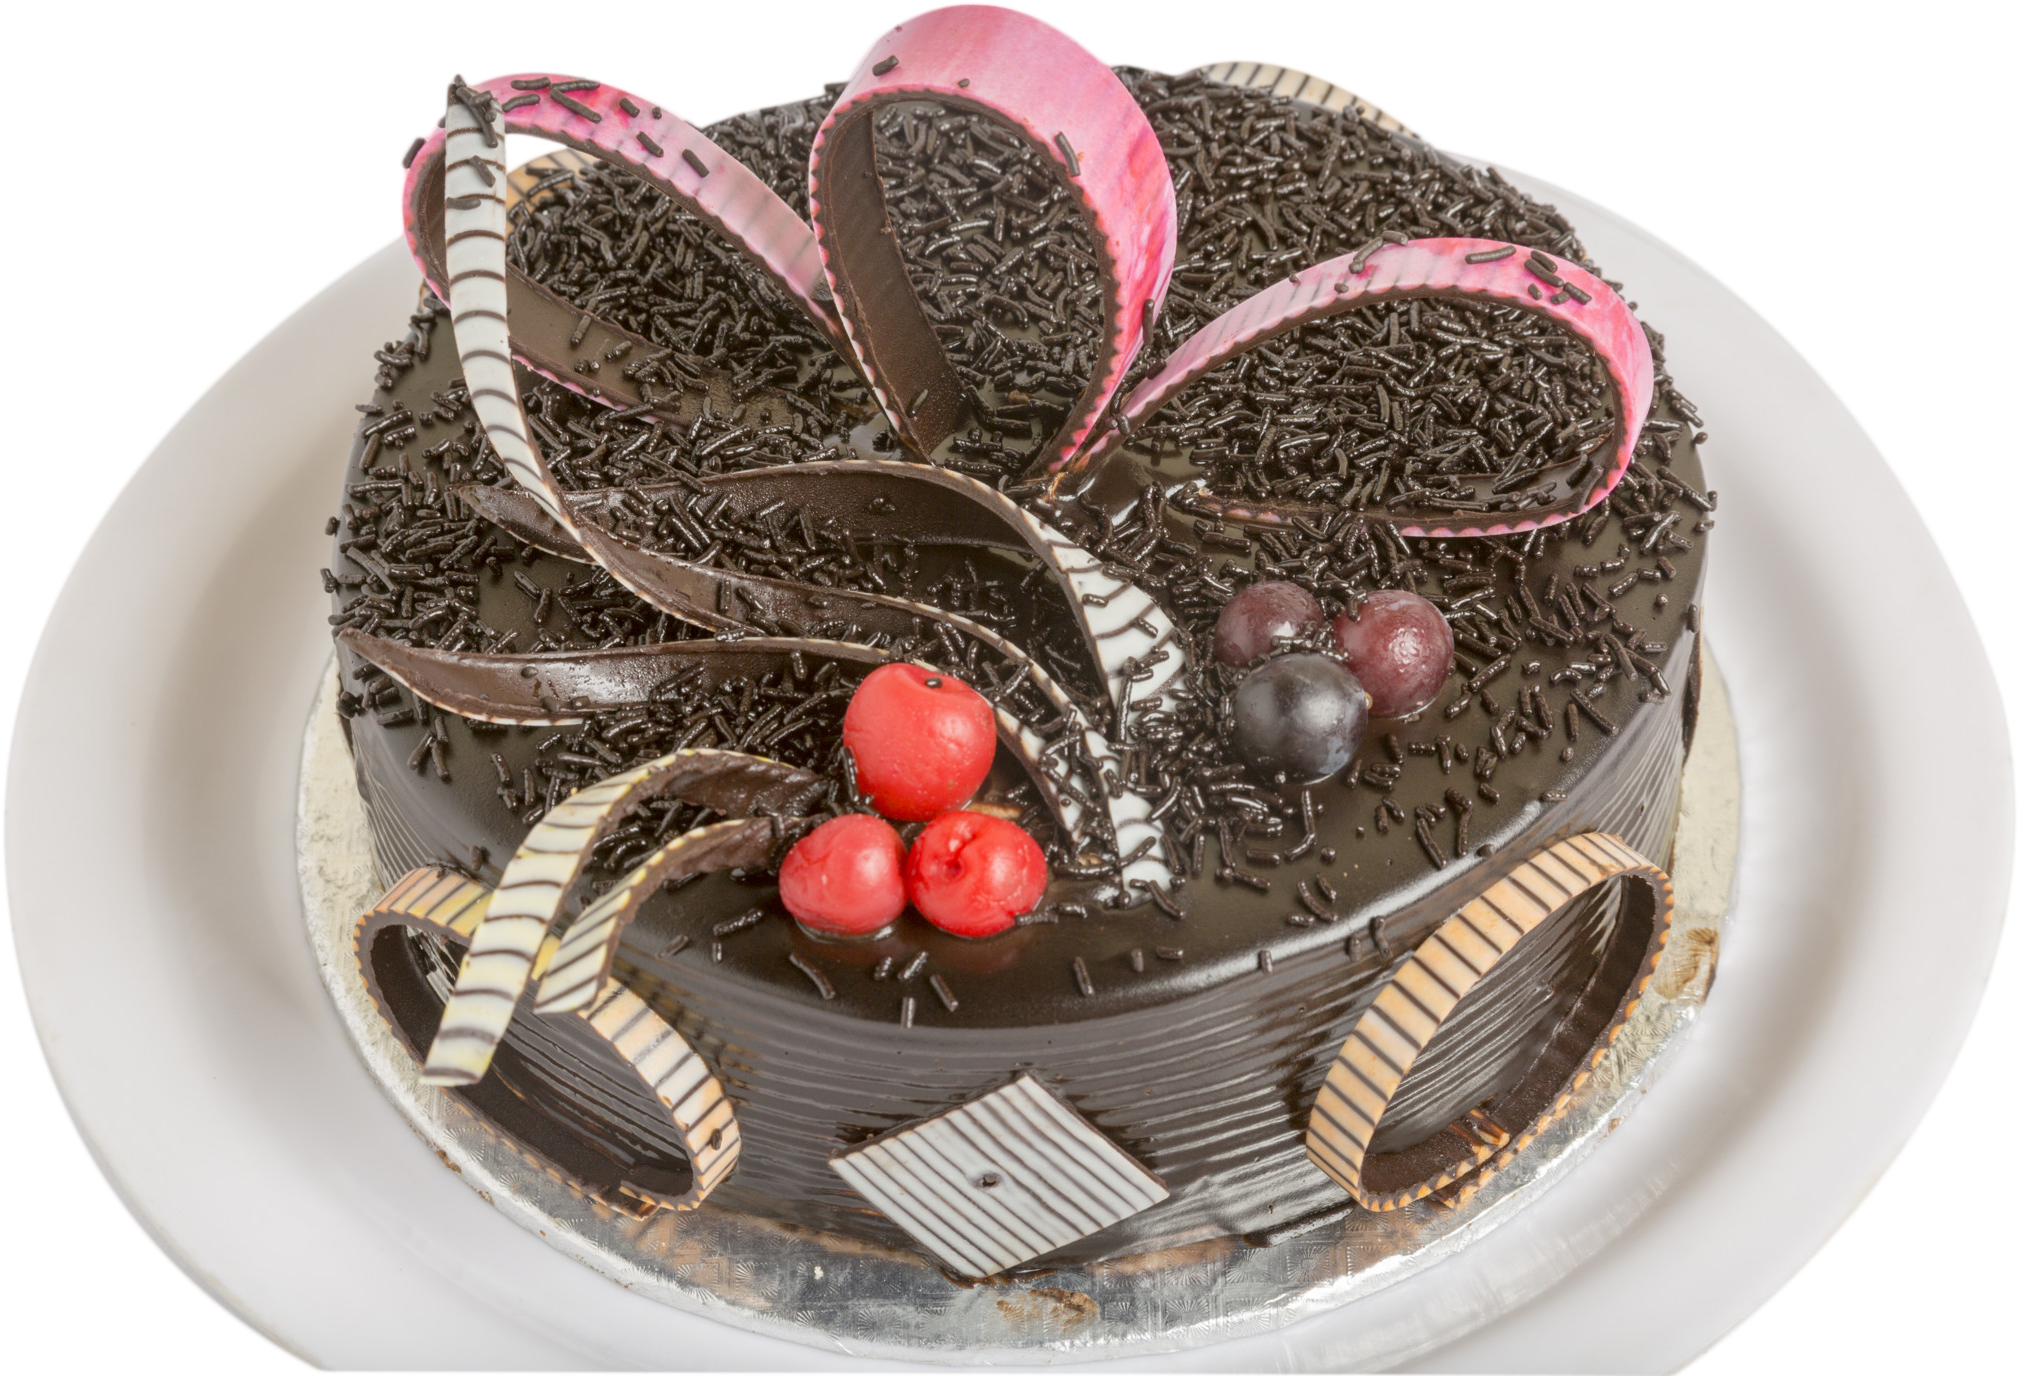 Decorative Chocolate Cakewith Chocolate Shavings